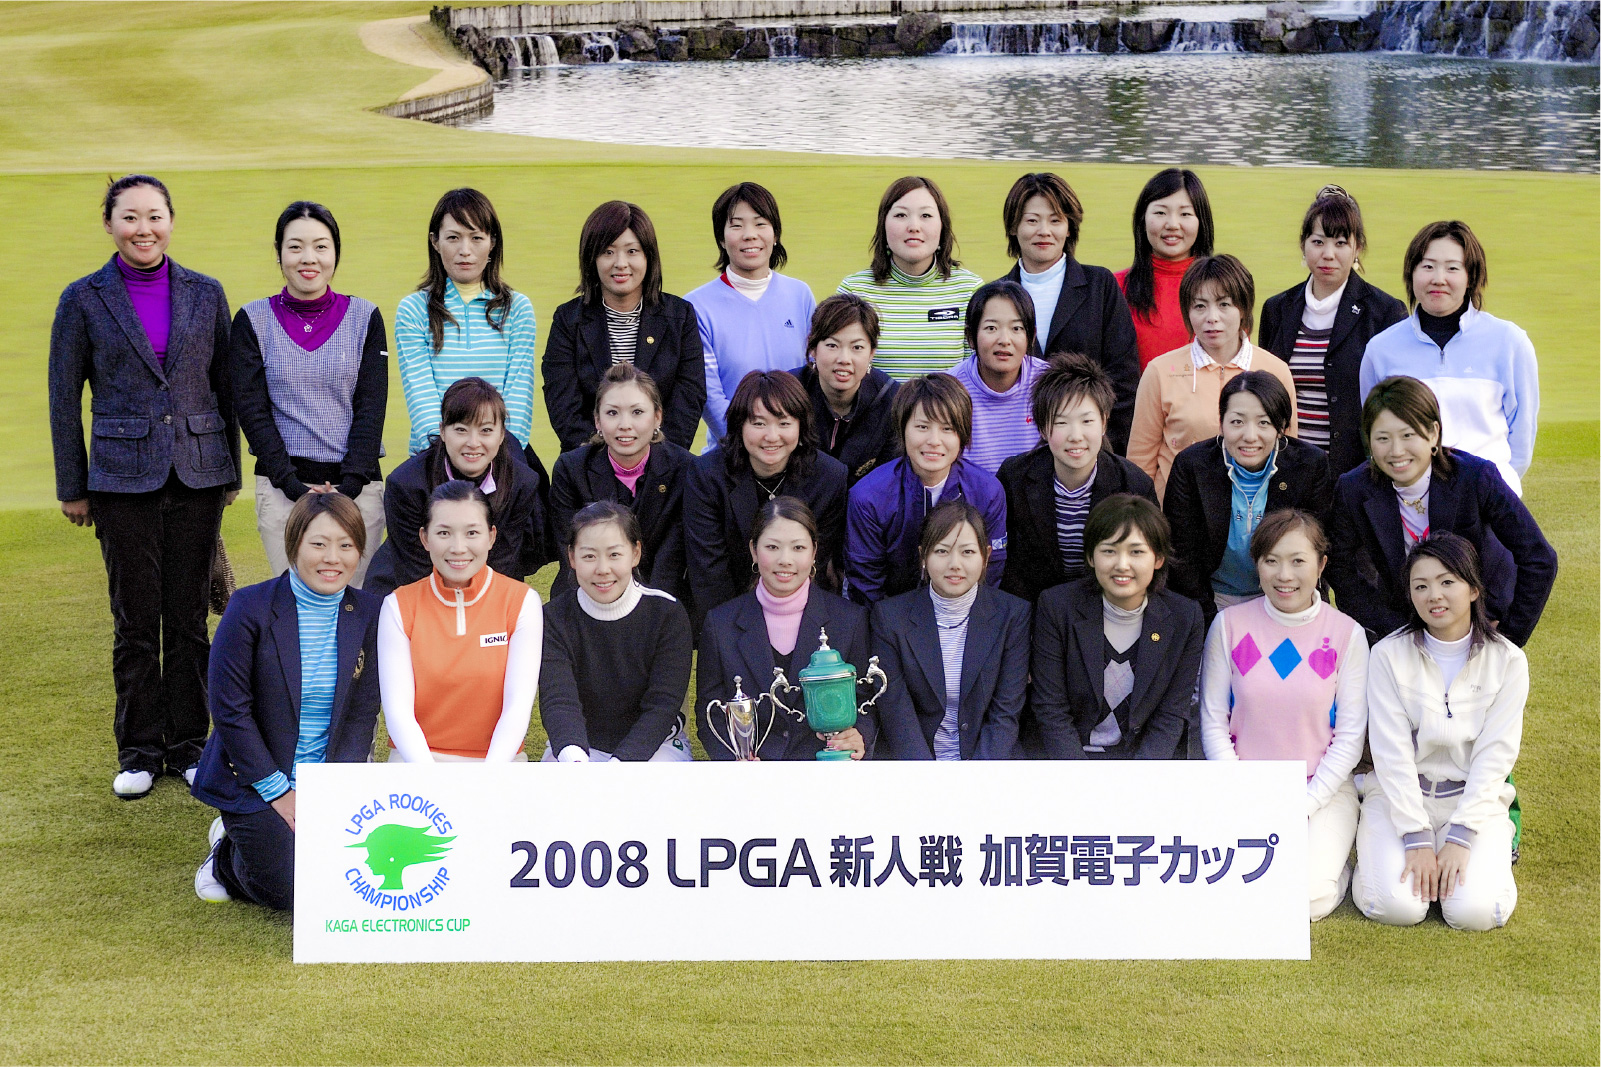 2008 LPGA 新人戦加賀電子カップ